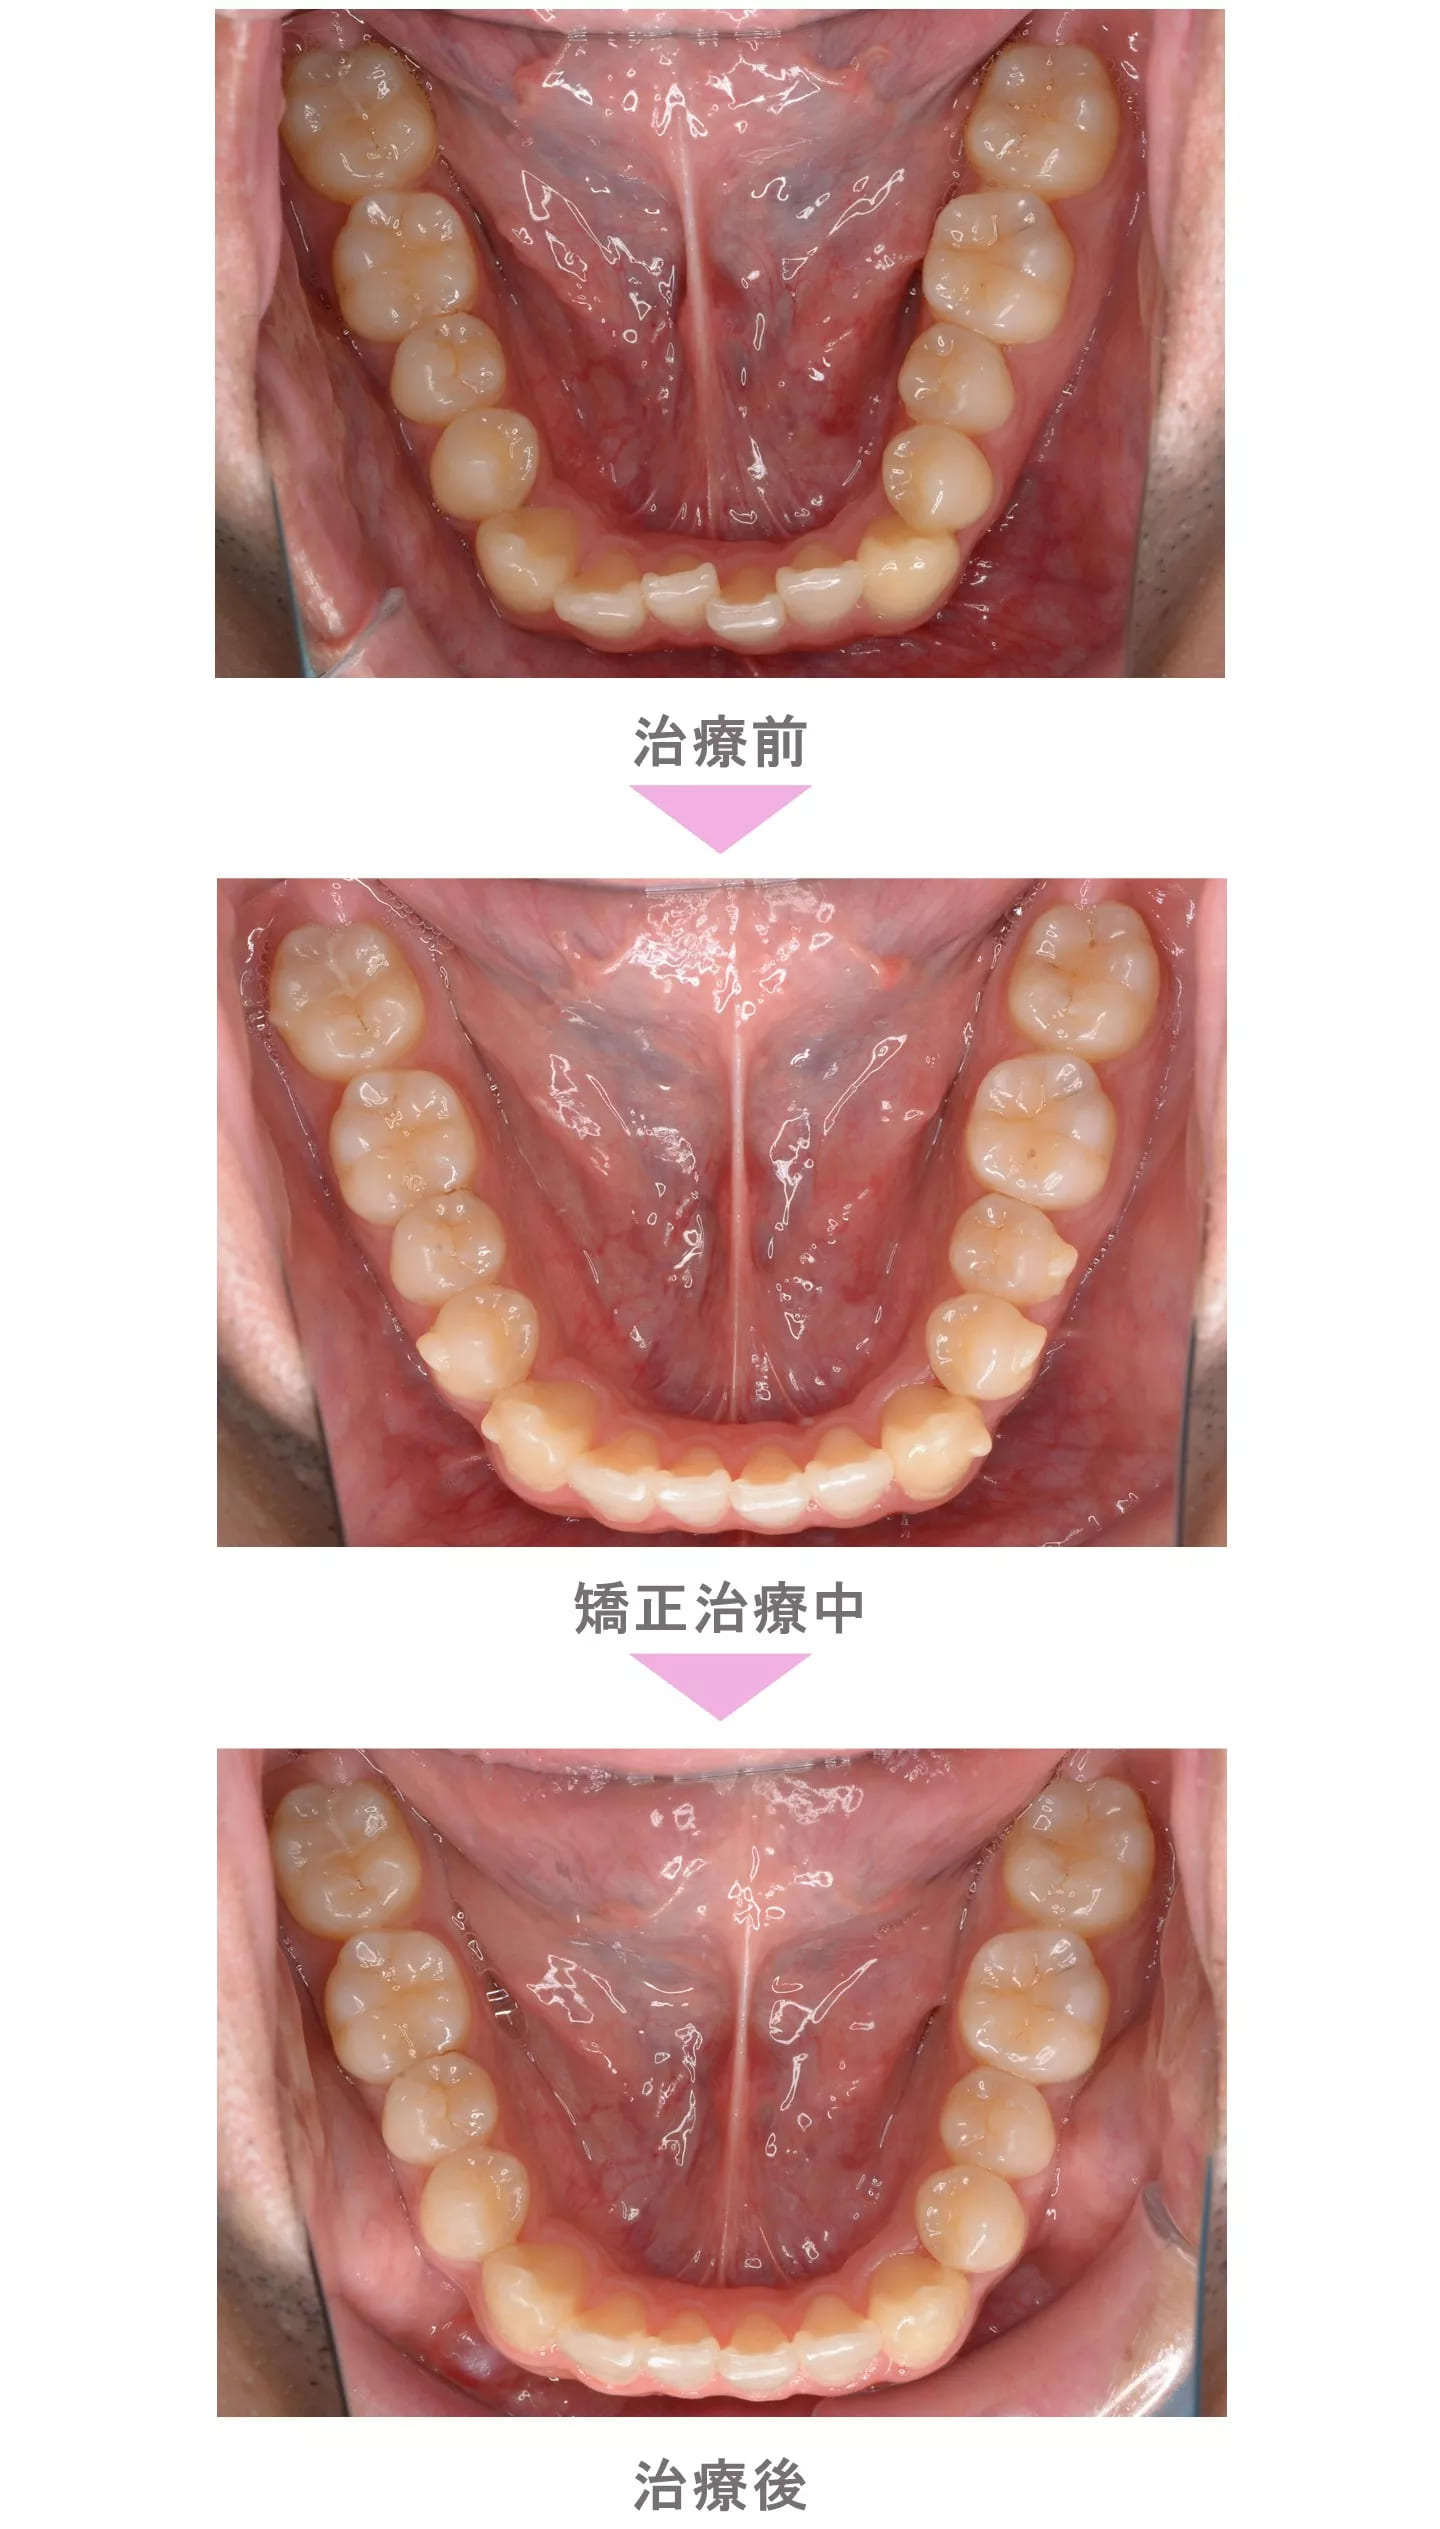 SmilePro インビザライン 歯科矯正 振動加速装置 | nate-hospital.com